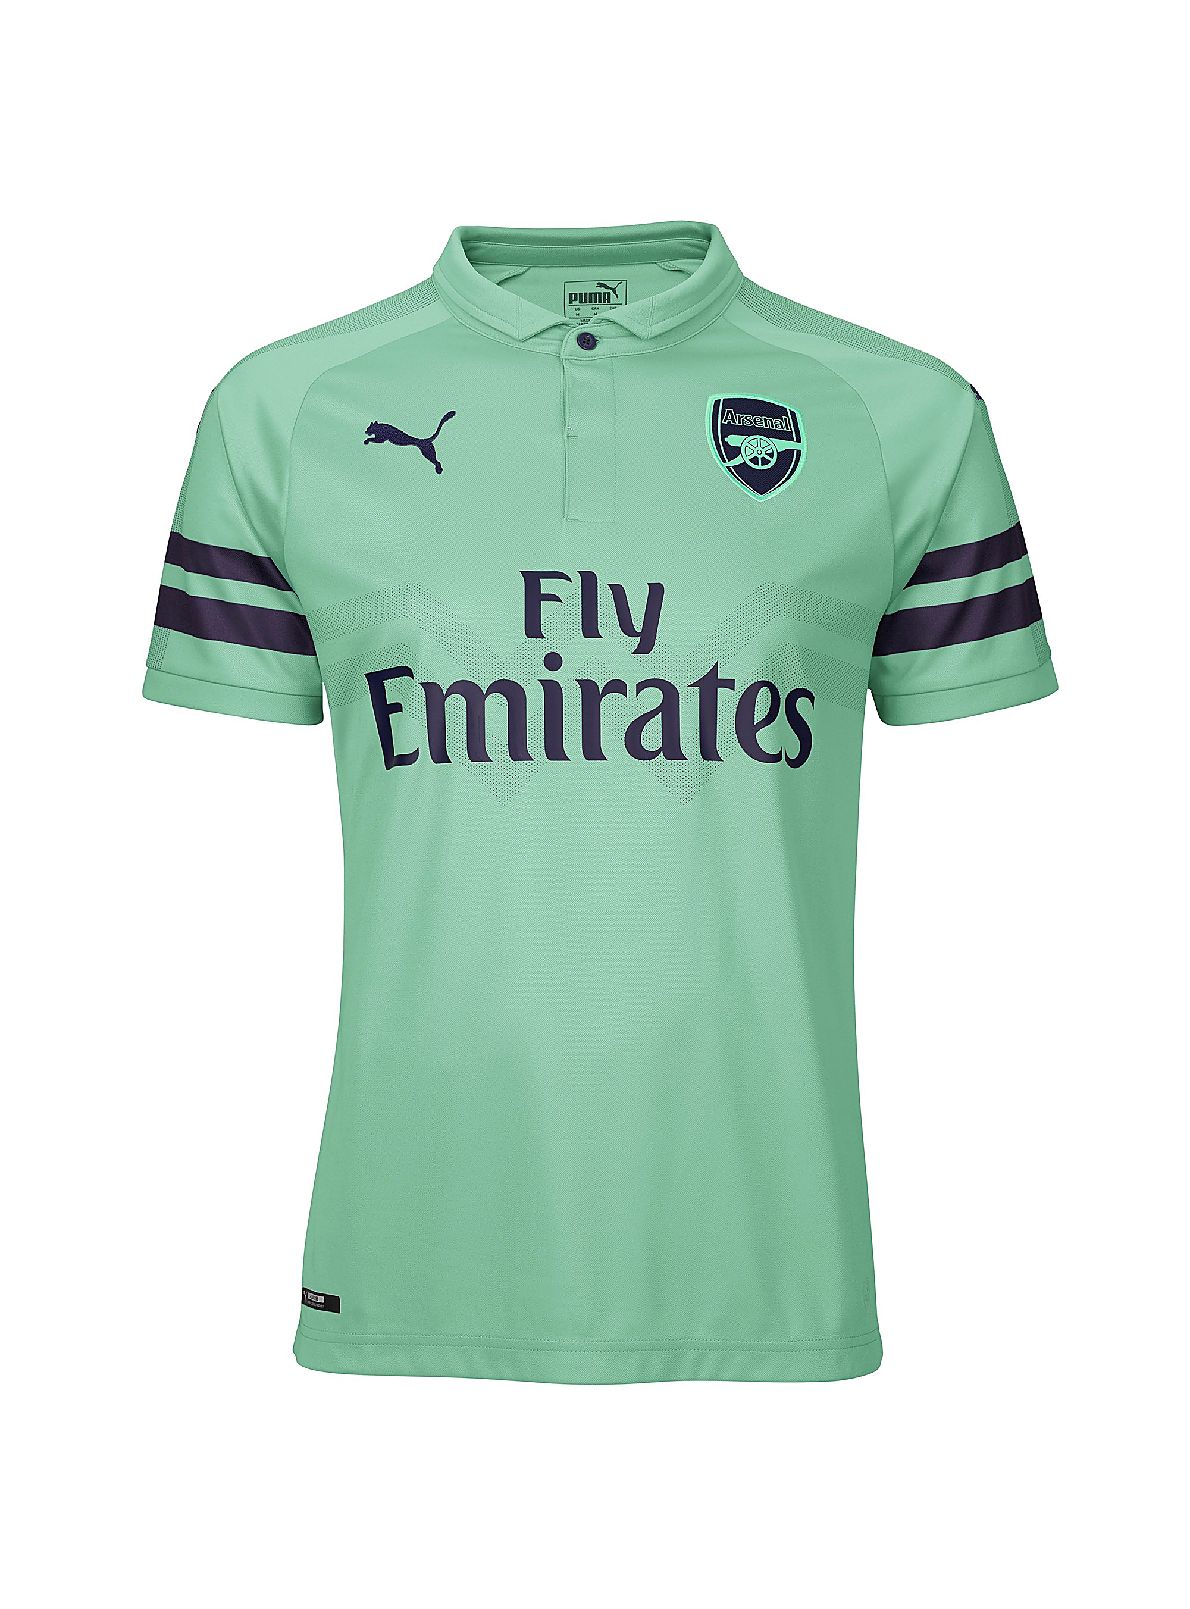 Arsenal 2018 19 Puma Third Kit 18 19 Kits Football Shirt Blog